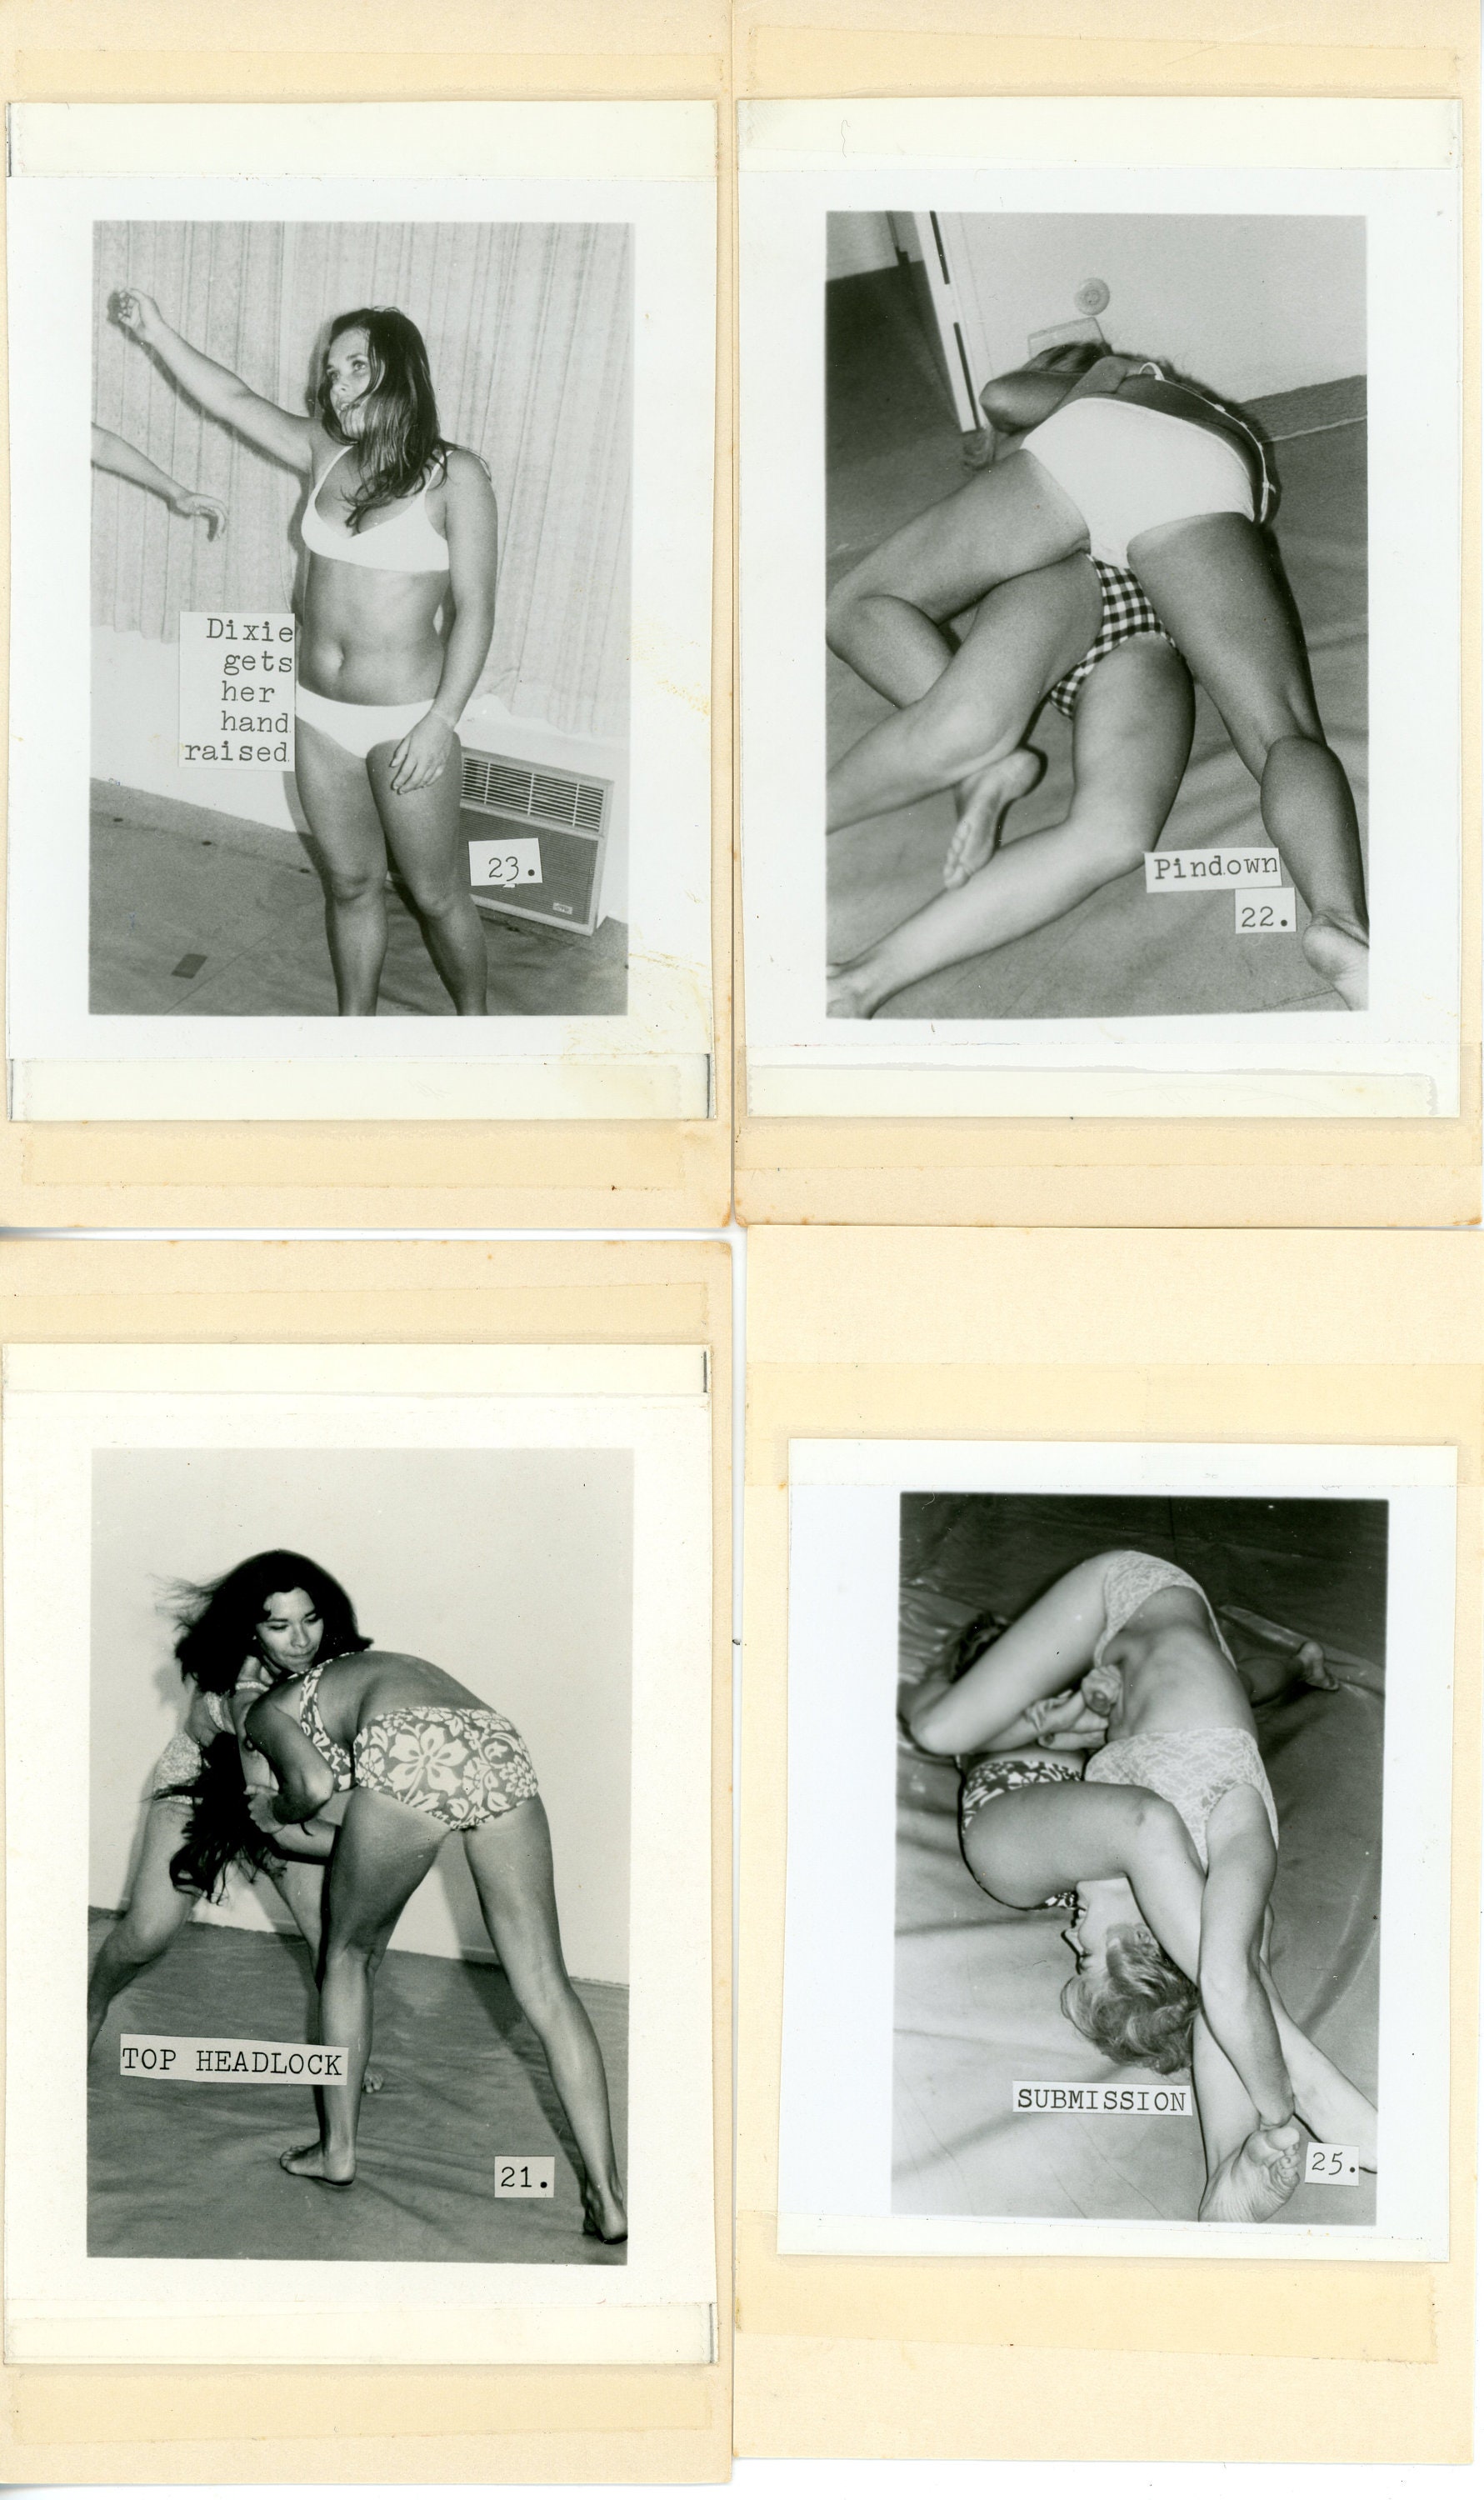 Vintage Wrestling Photo 1970s Women Wrestlers California image pic